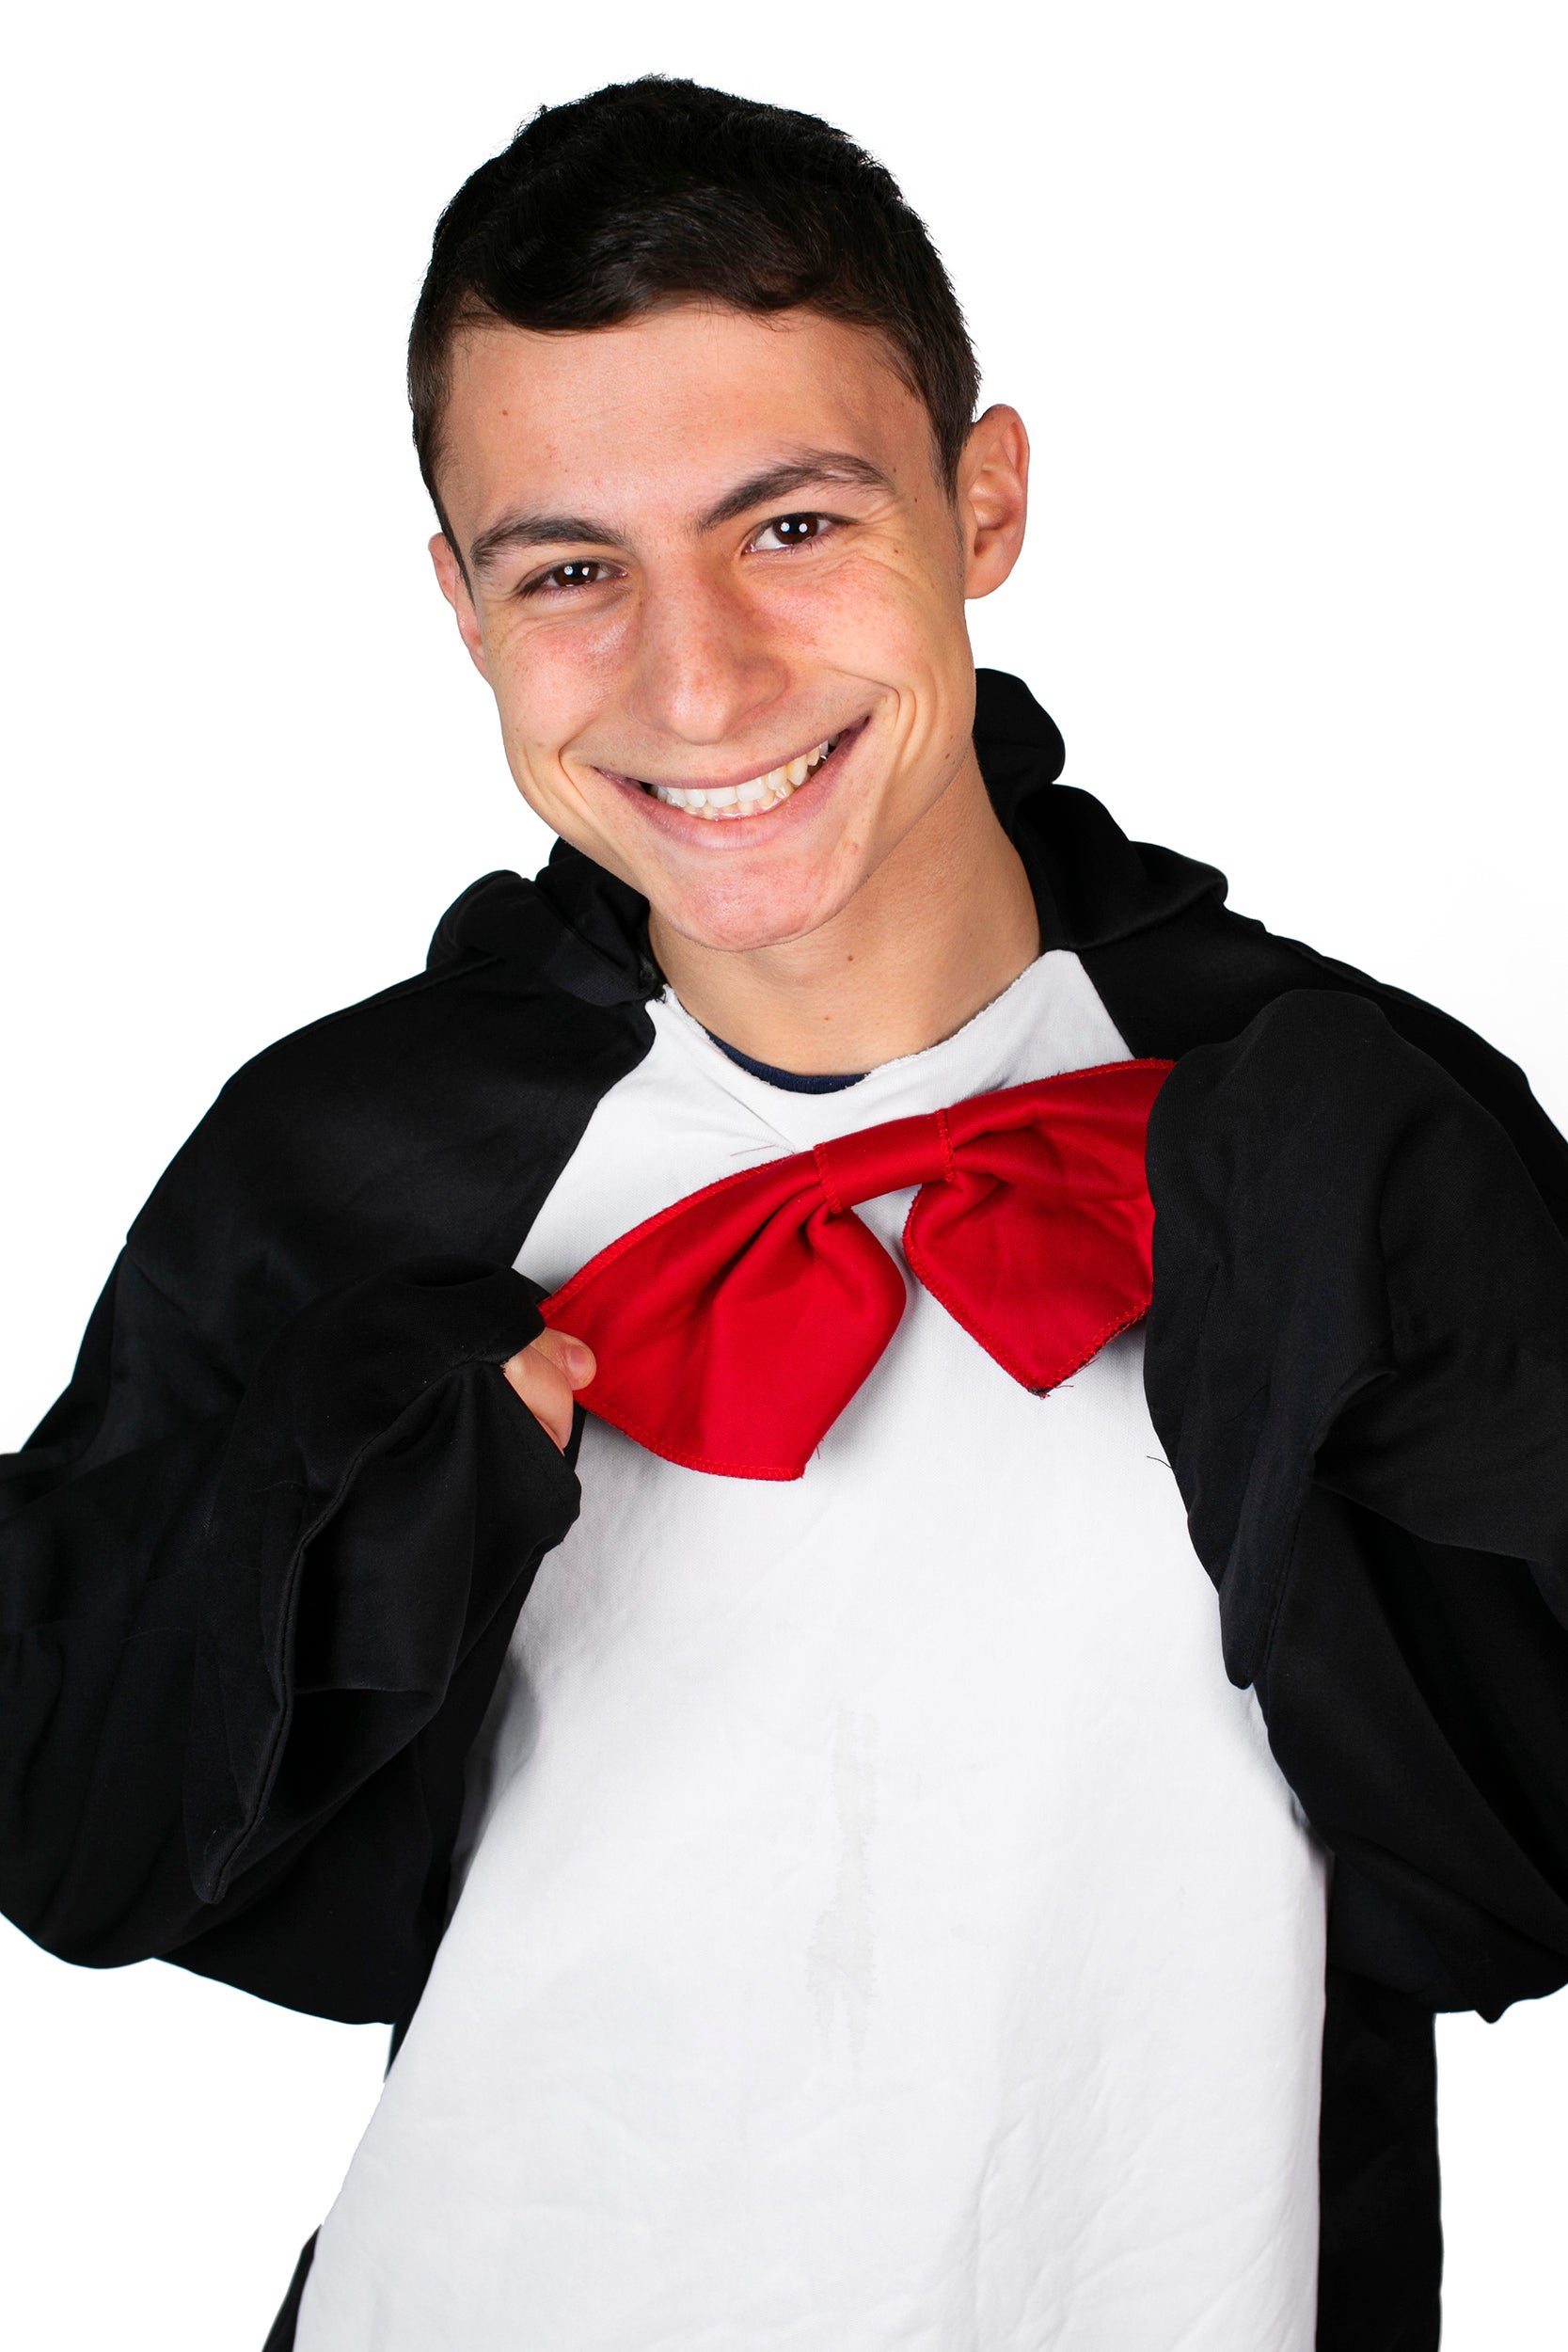 Matthew Miller dresses as the Penguin Mascot for Quincy House.